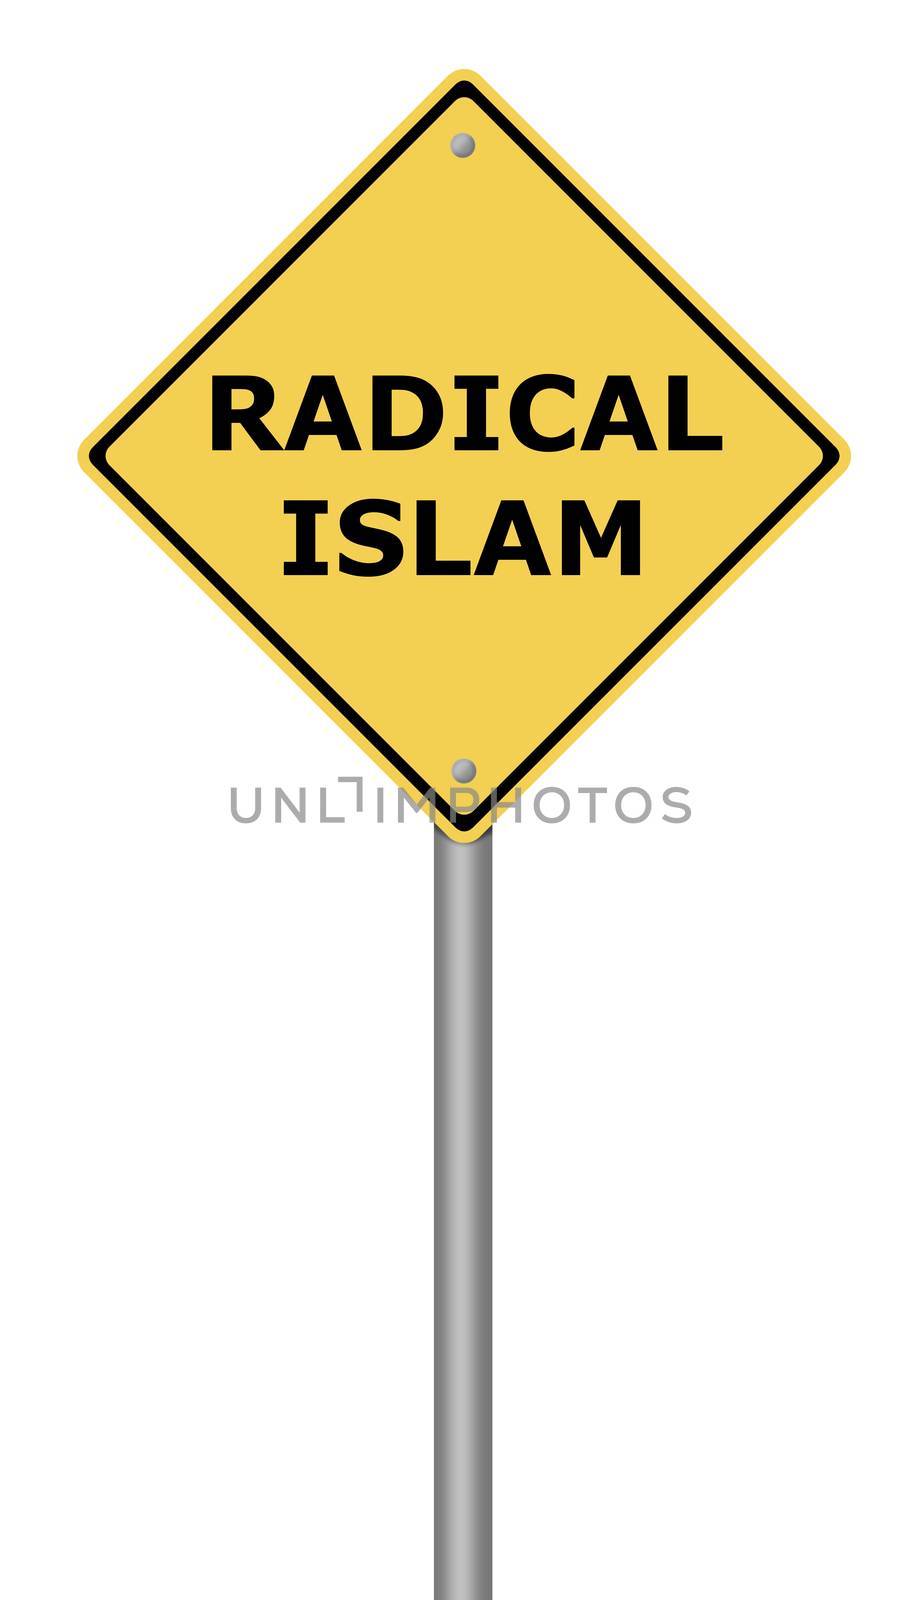 Radical Islam Warning Sign by hlehnerer